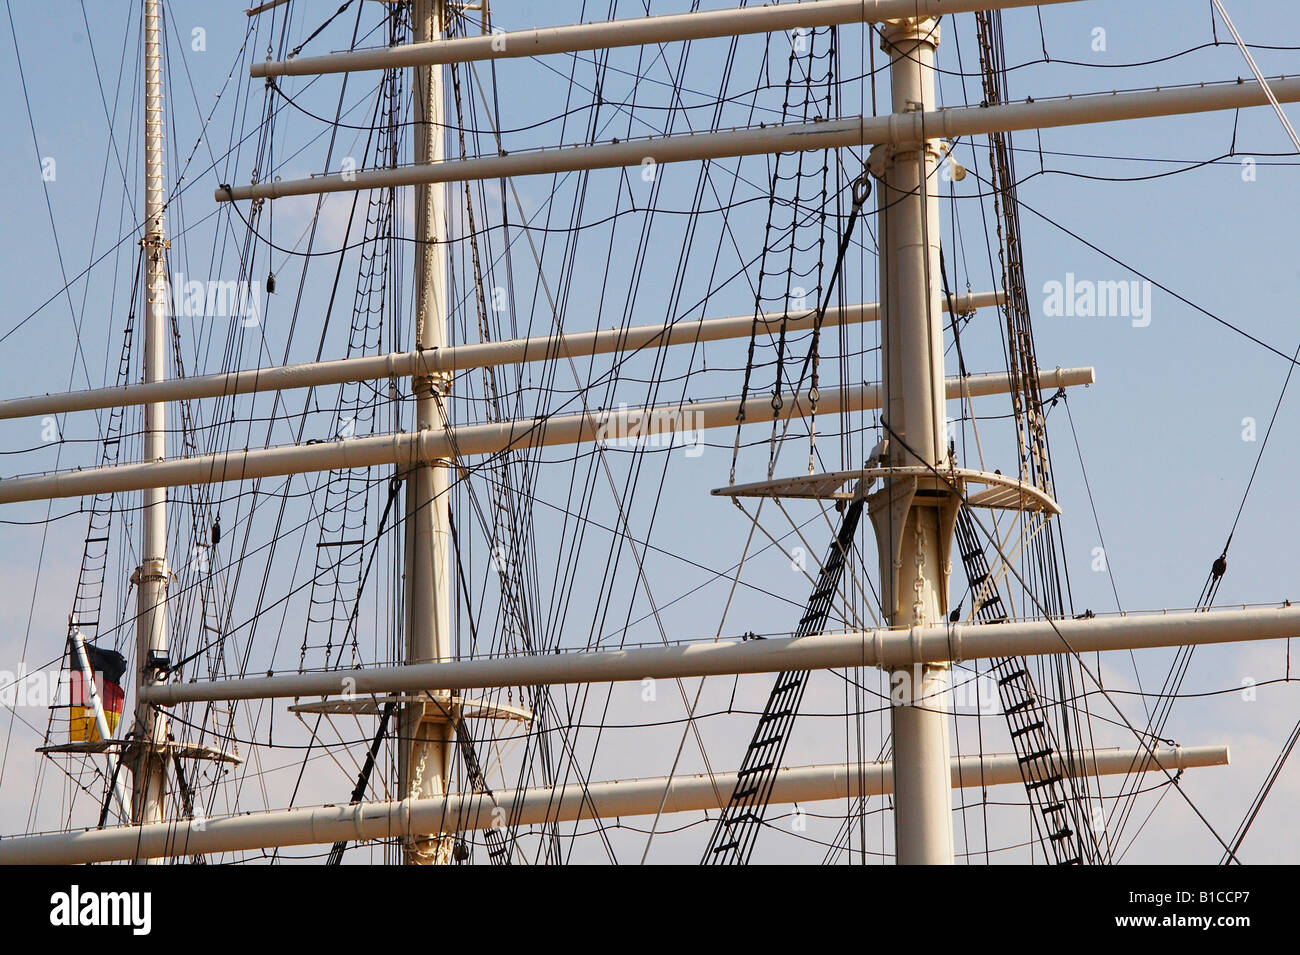 masts of a sailboat Stock Photo